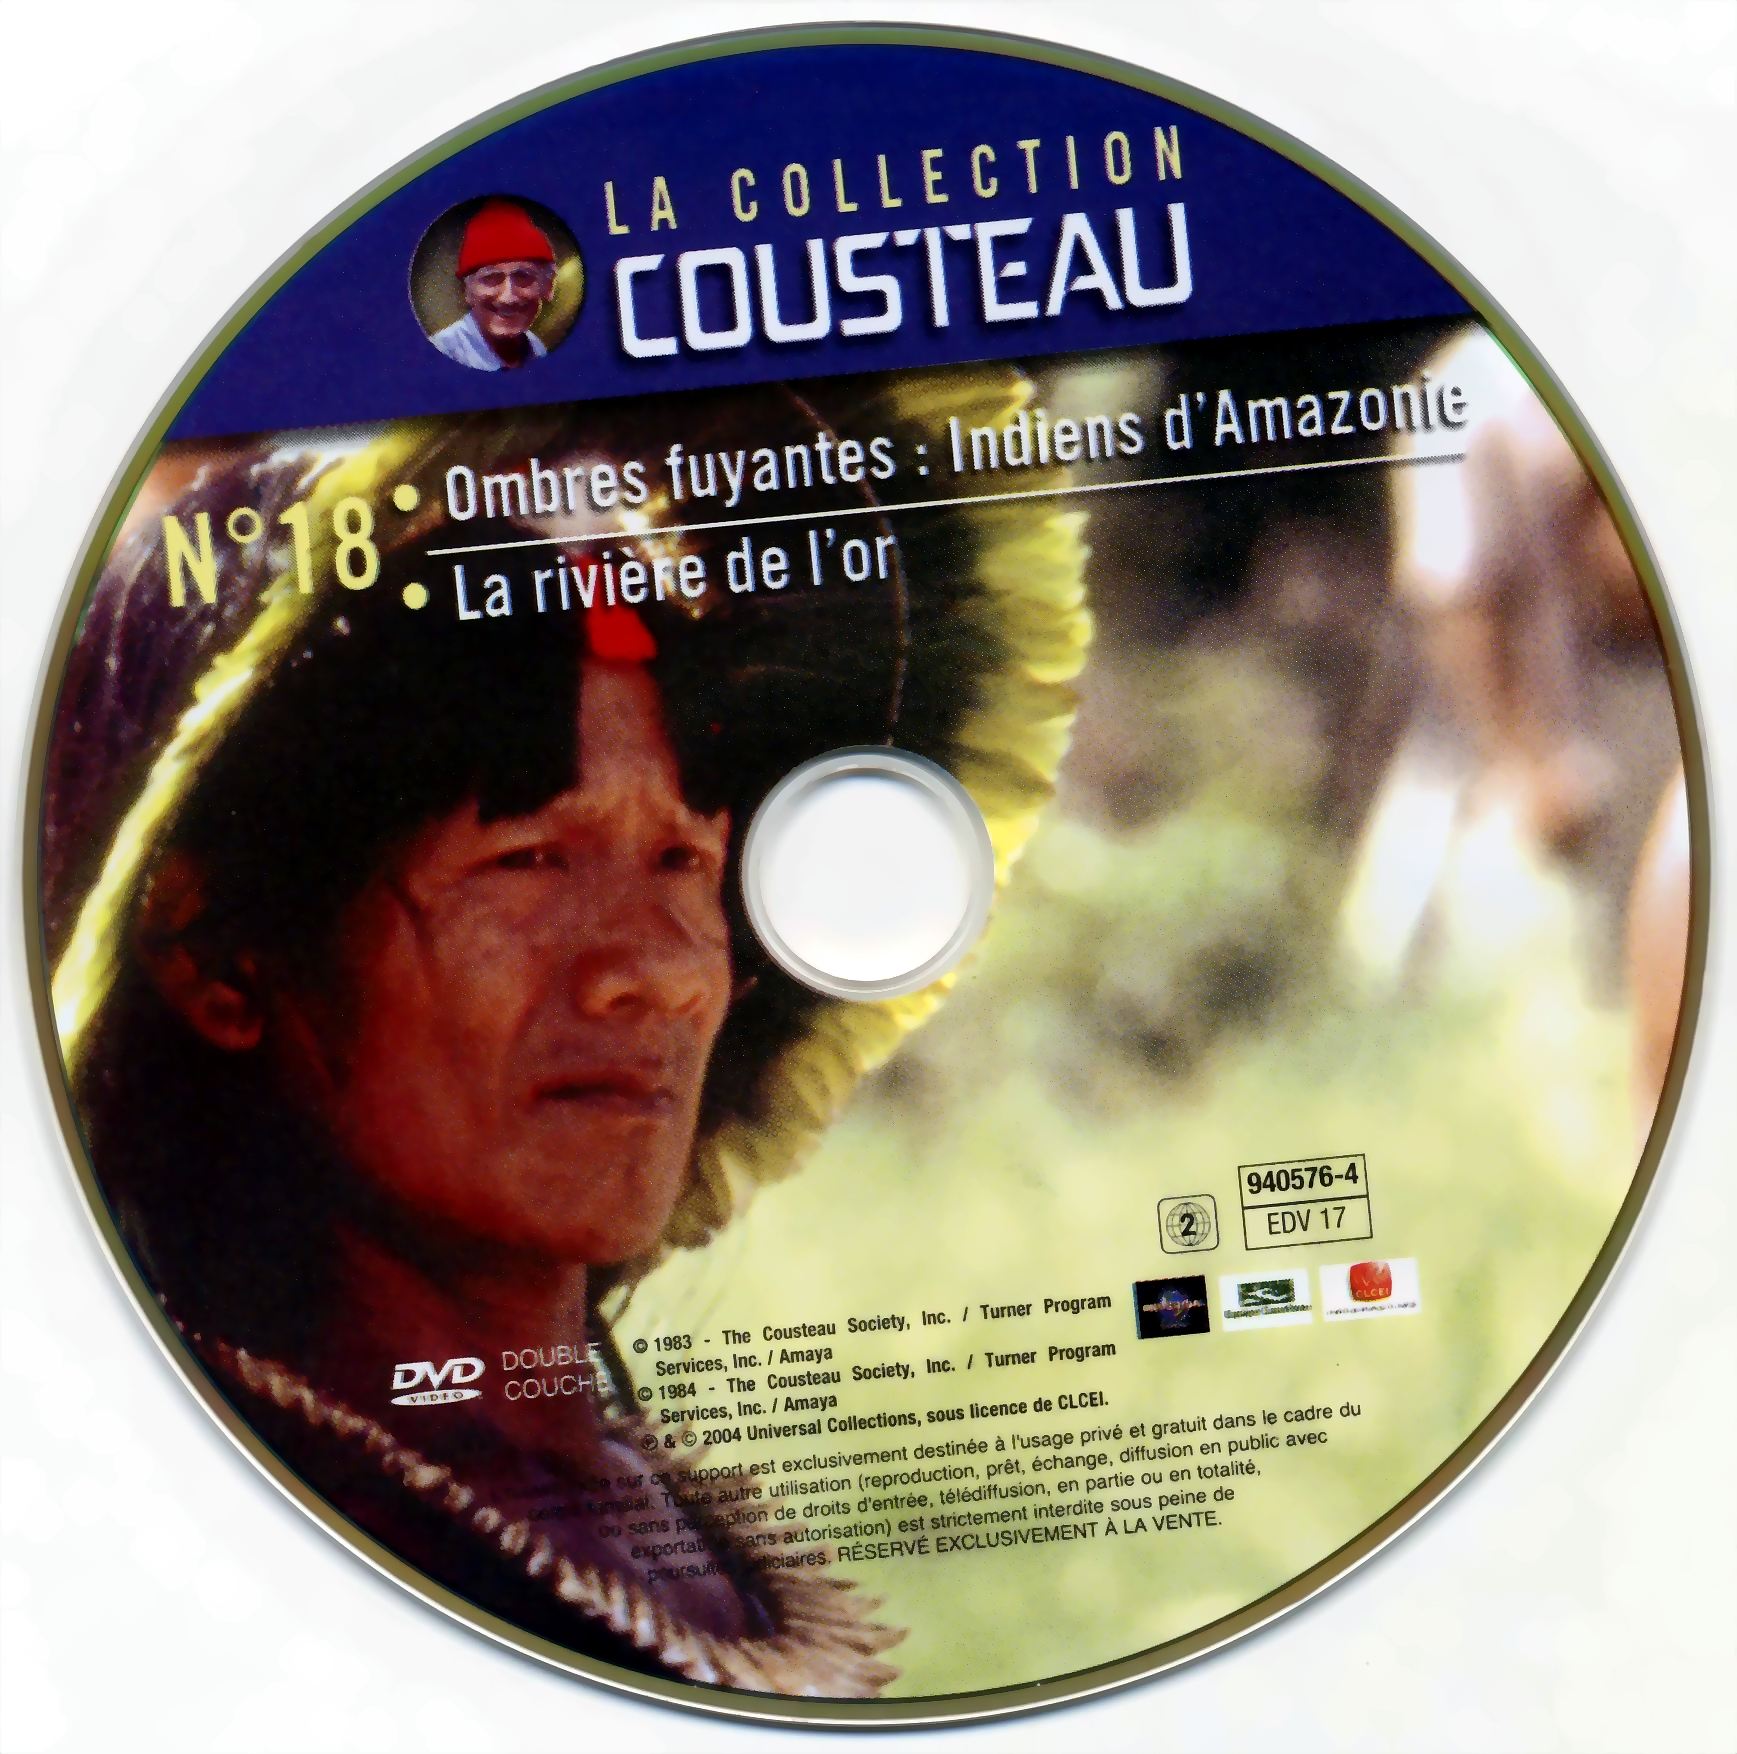 Cousteau Collection vol 18